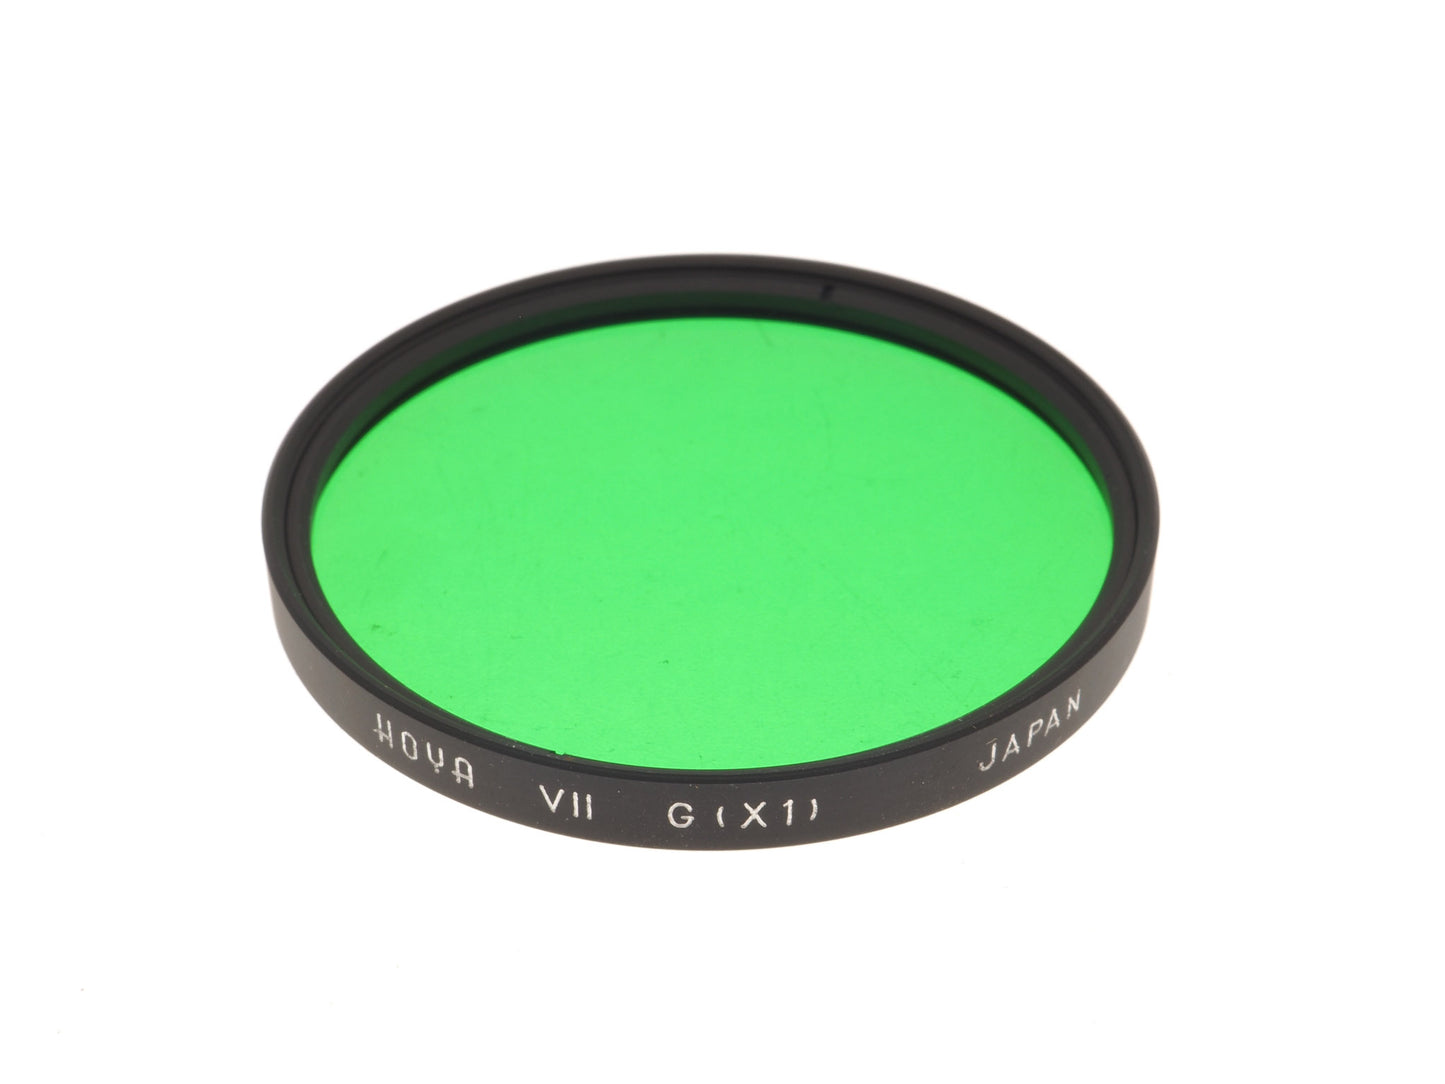 Hoya Series VII Green Filter G(X1) - Accessory